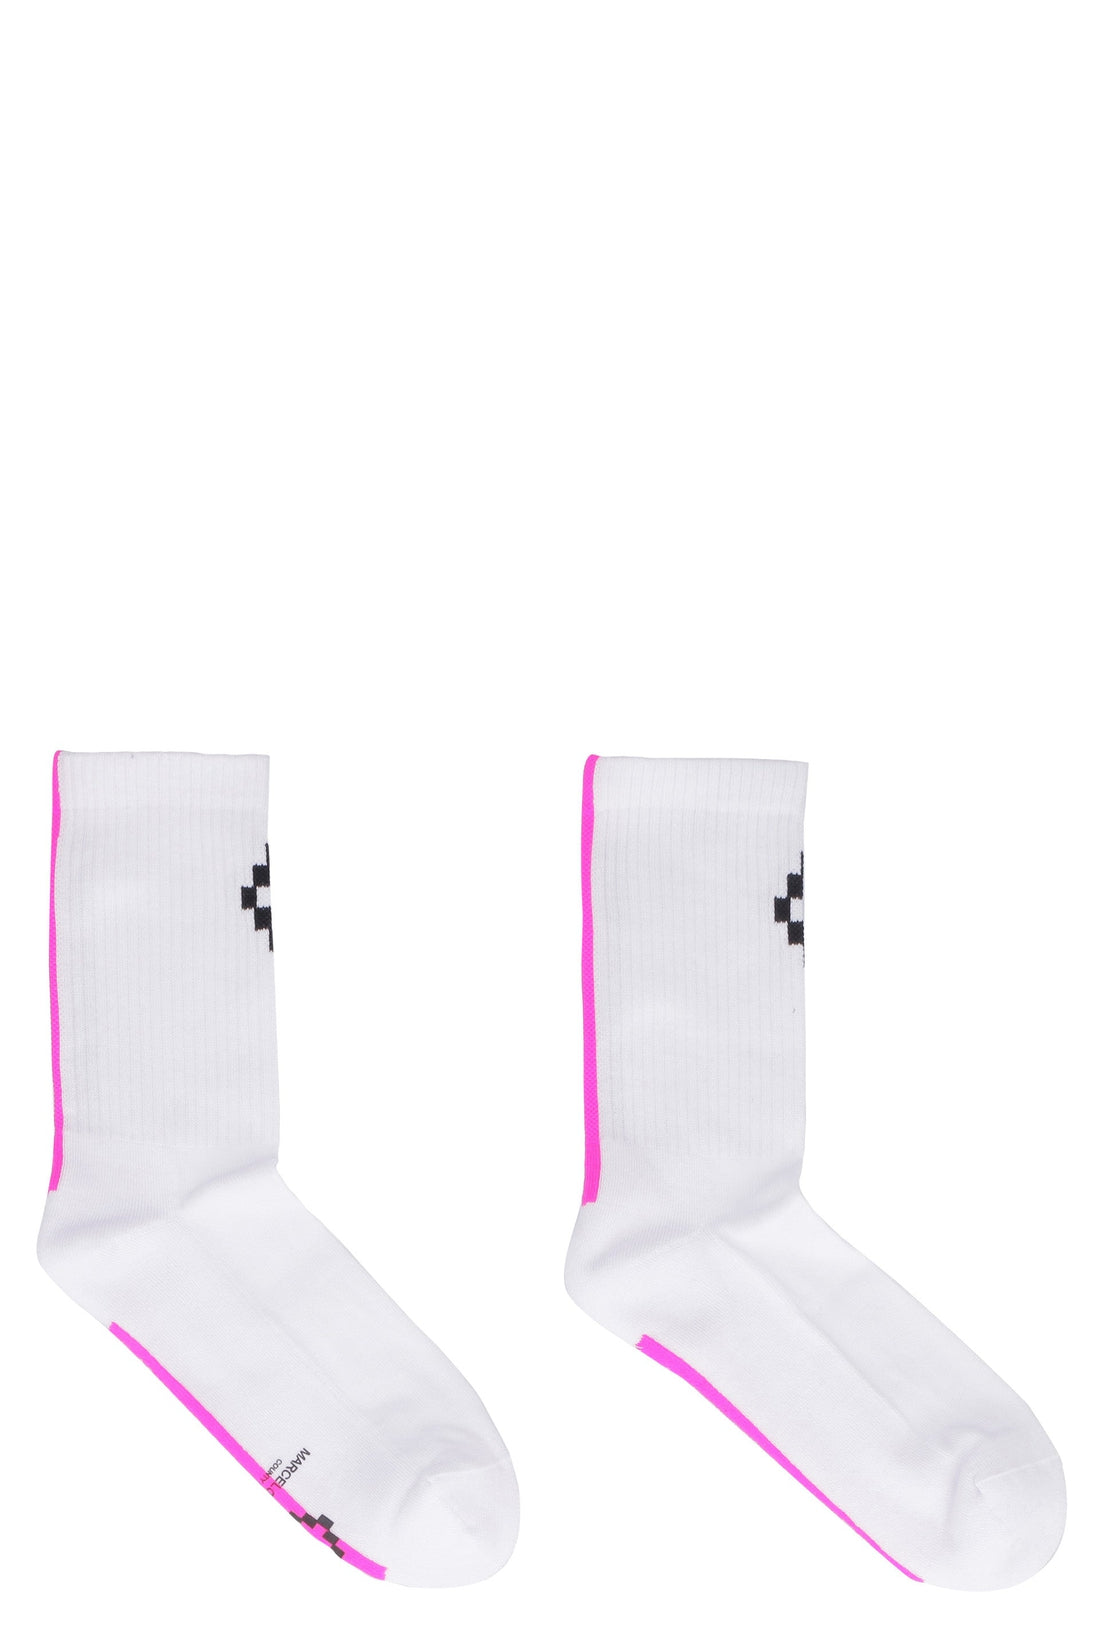 Marcelo Burlon County of Milan-OUTLET-SALE-Cotton blend socks with logo-ARCHIVIST